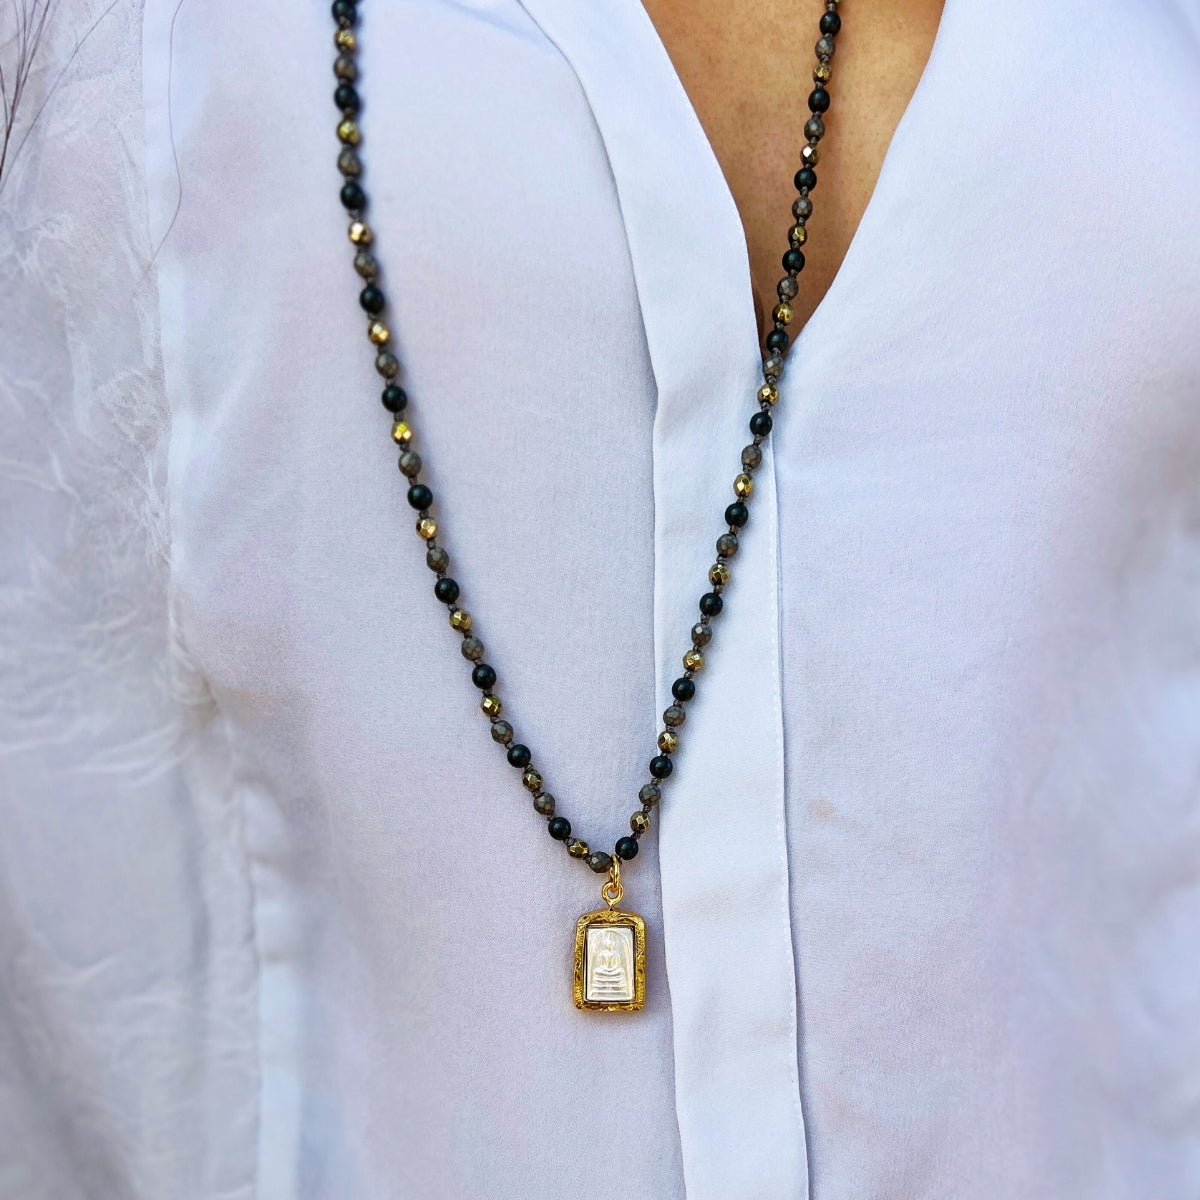 Spirit Whisperer Talisman Necklace - One of a Kind Buddha Necklace